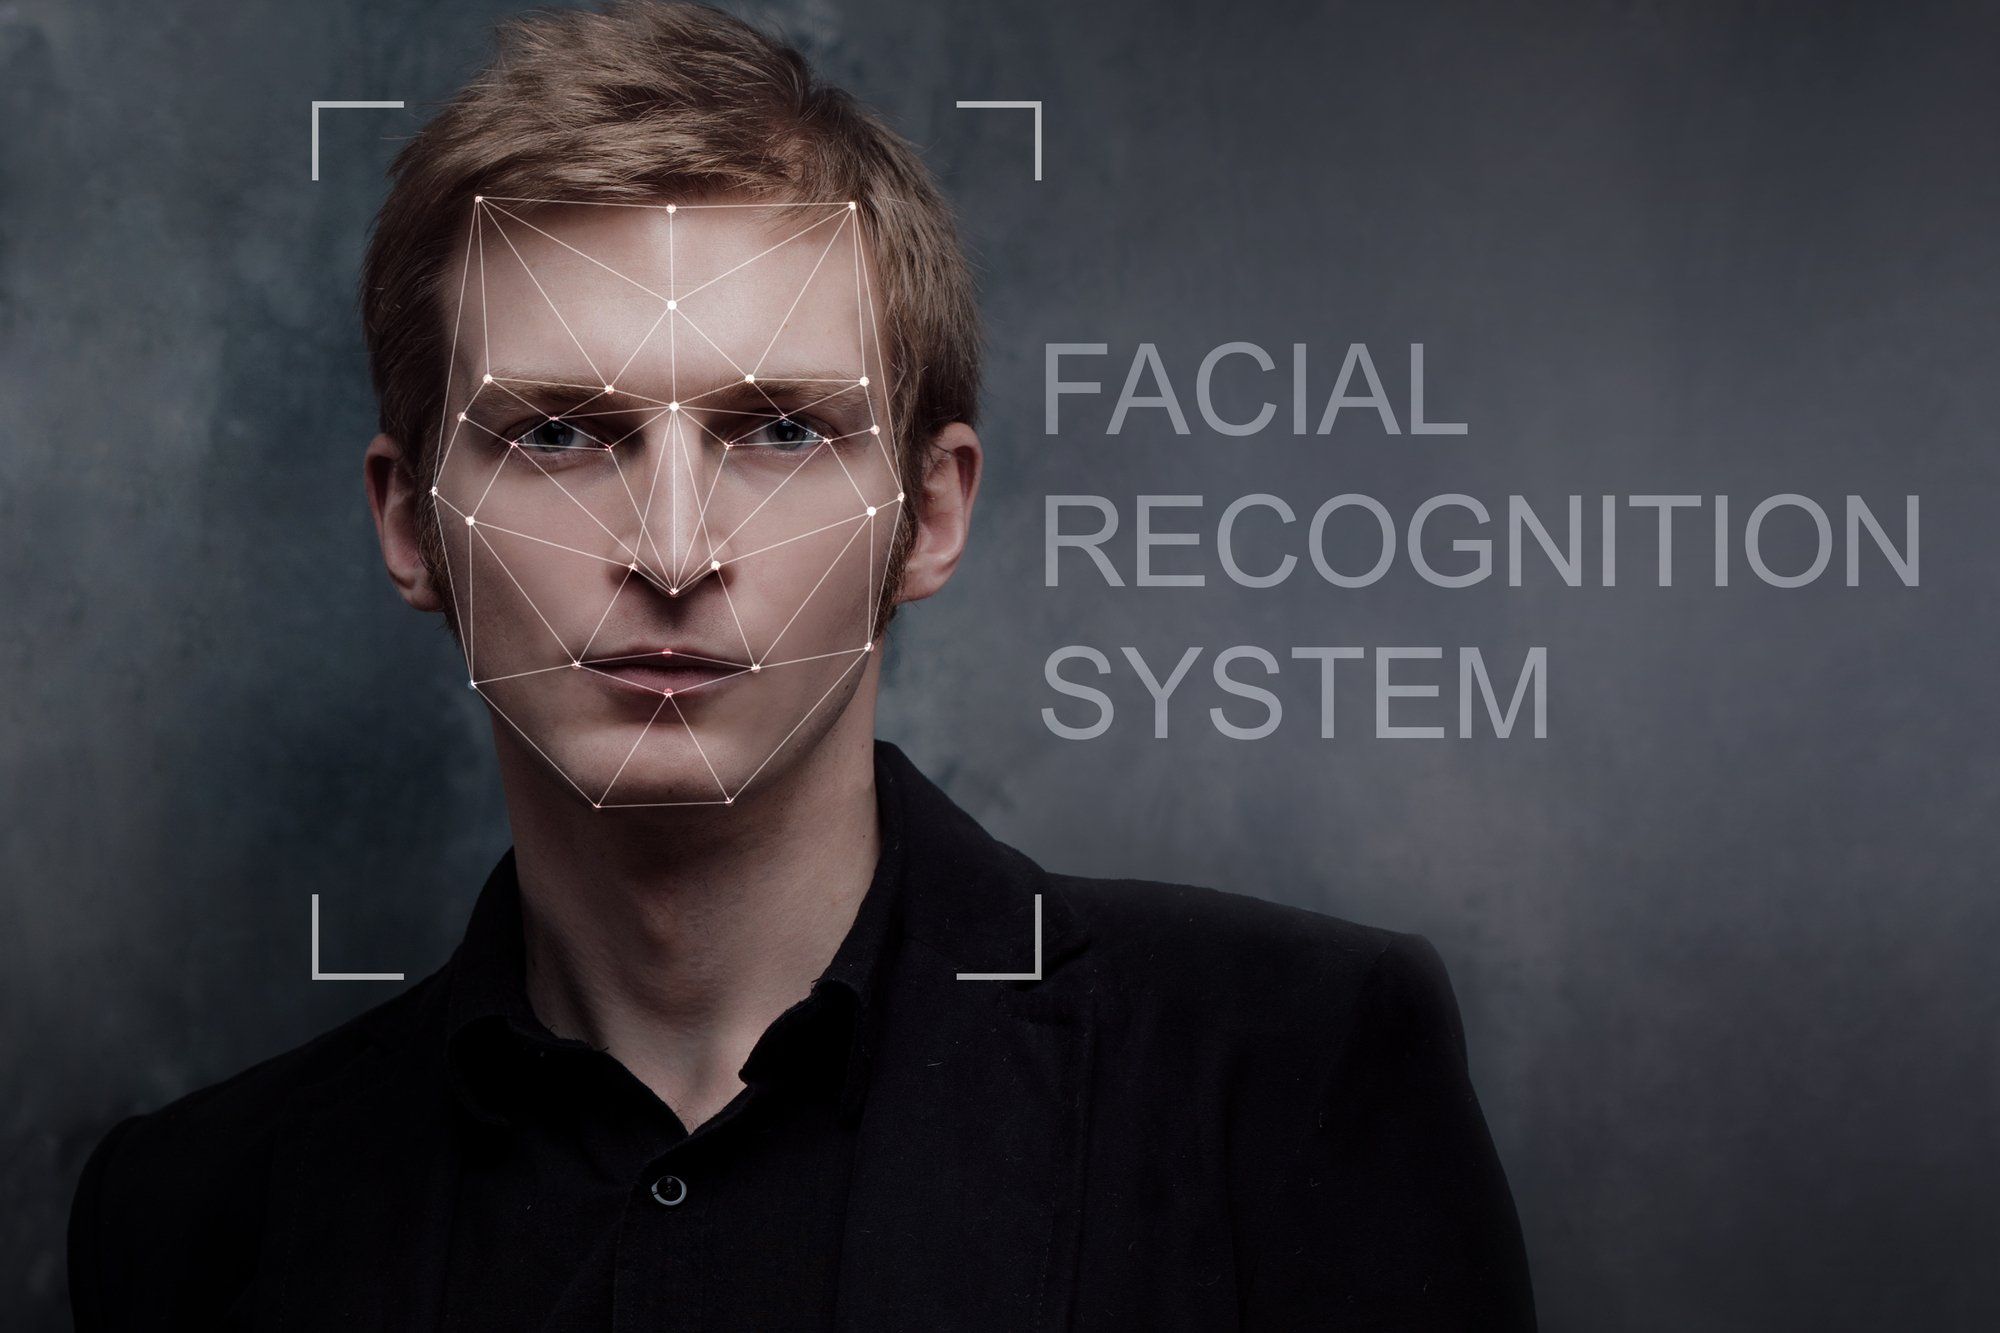 ProctorU is facing a facial recognition biometrics class action lawsuit.